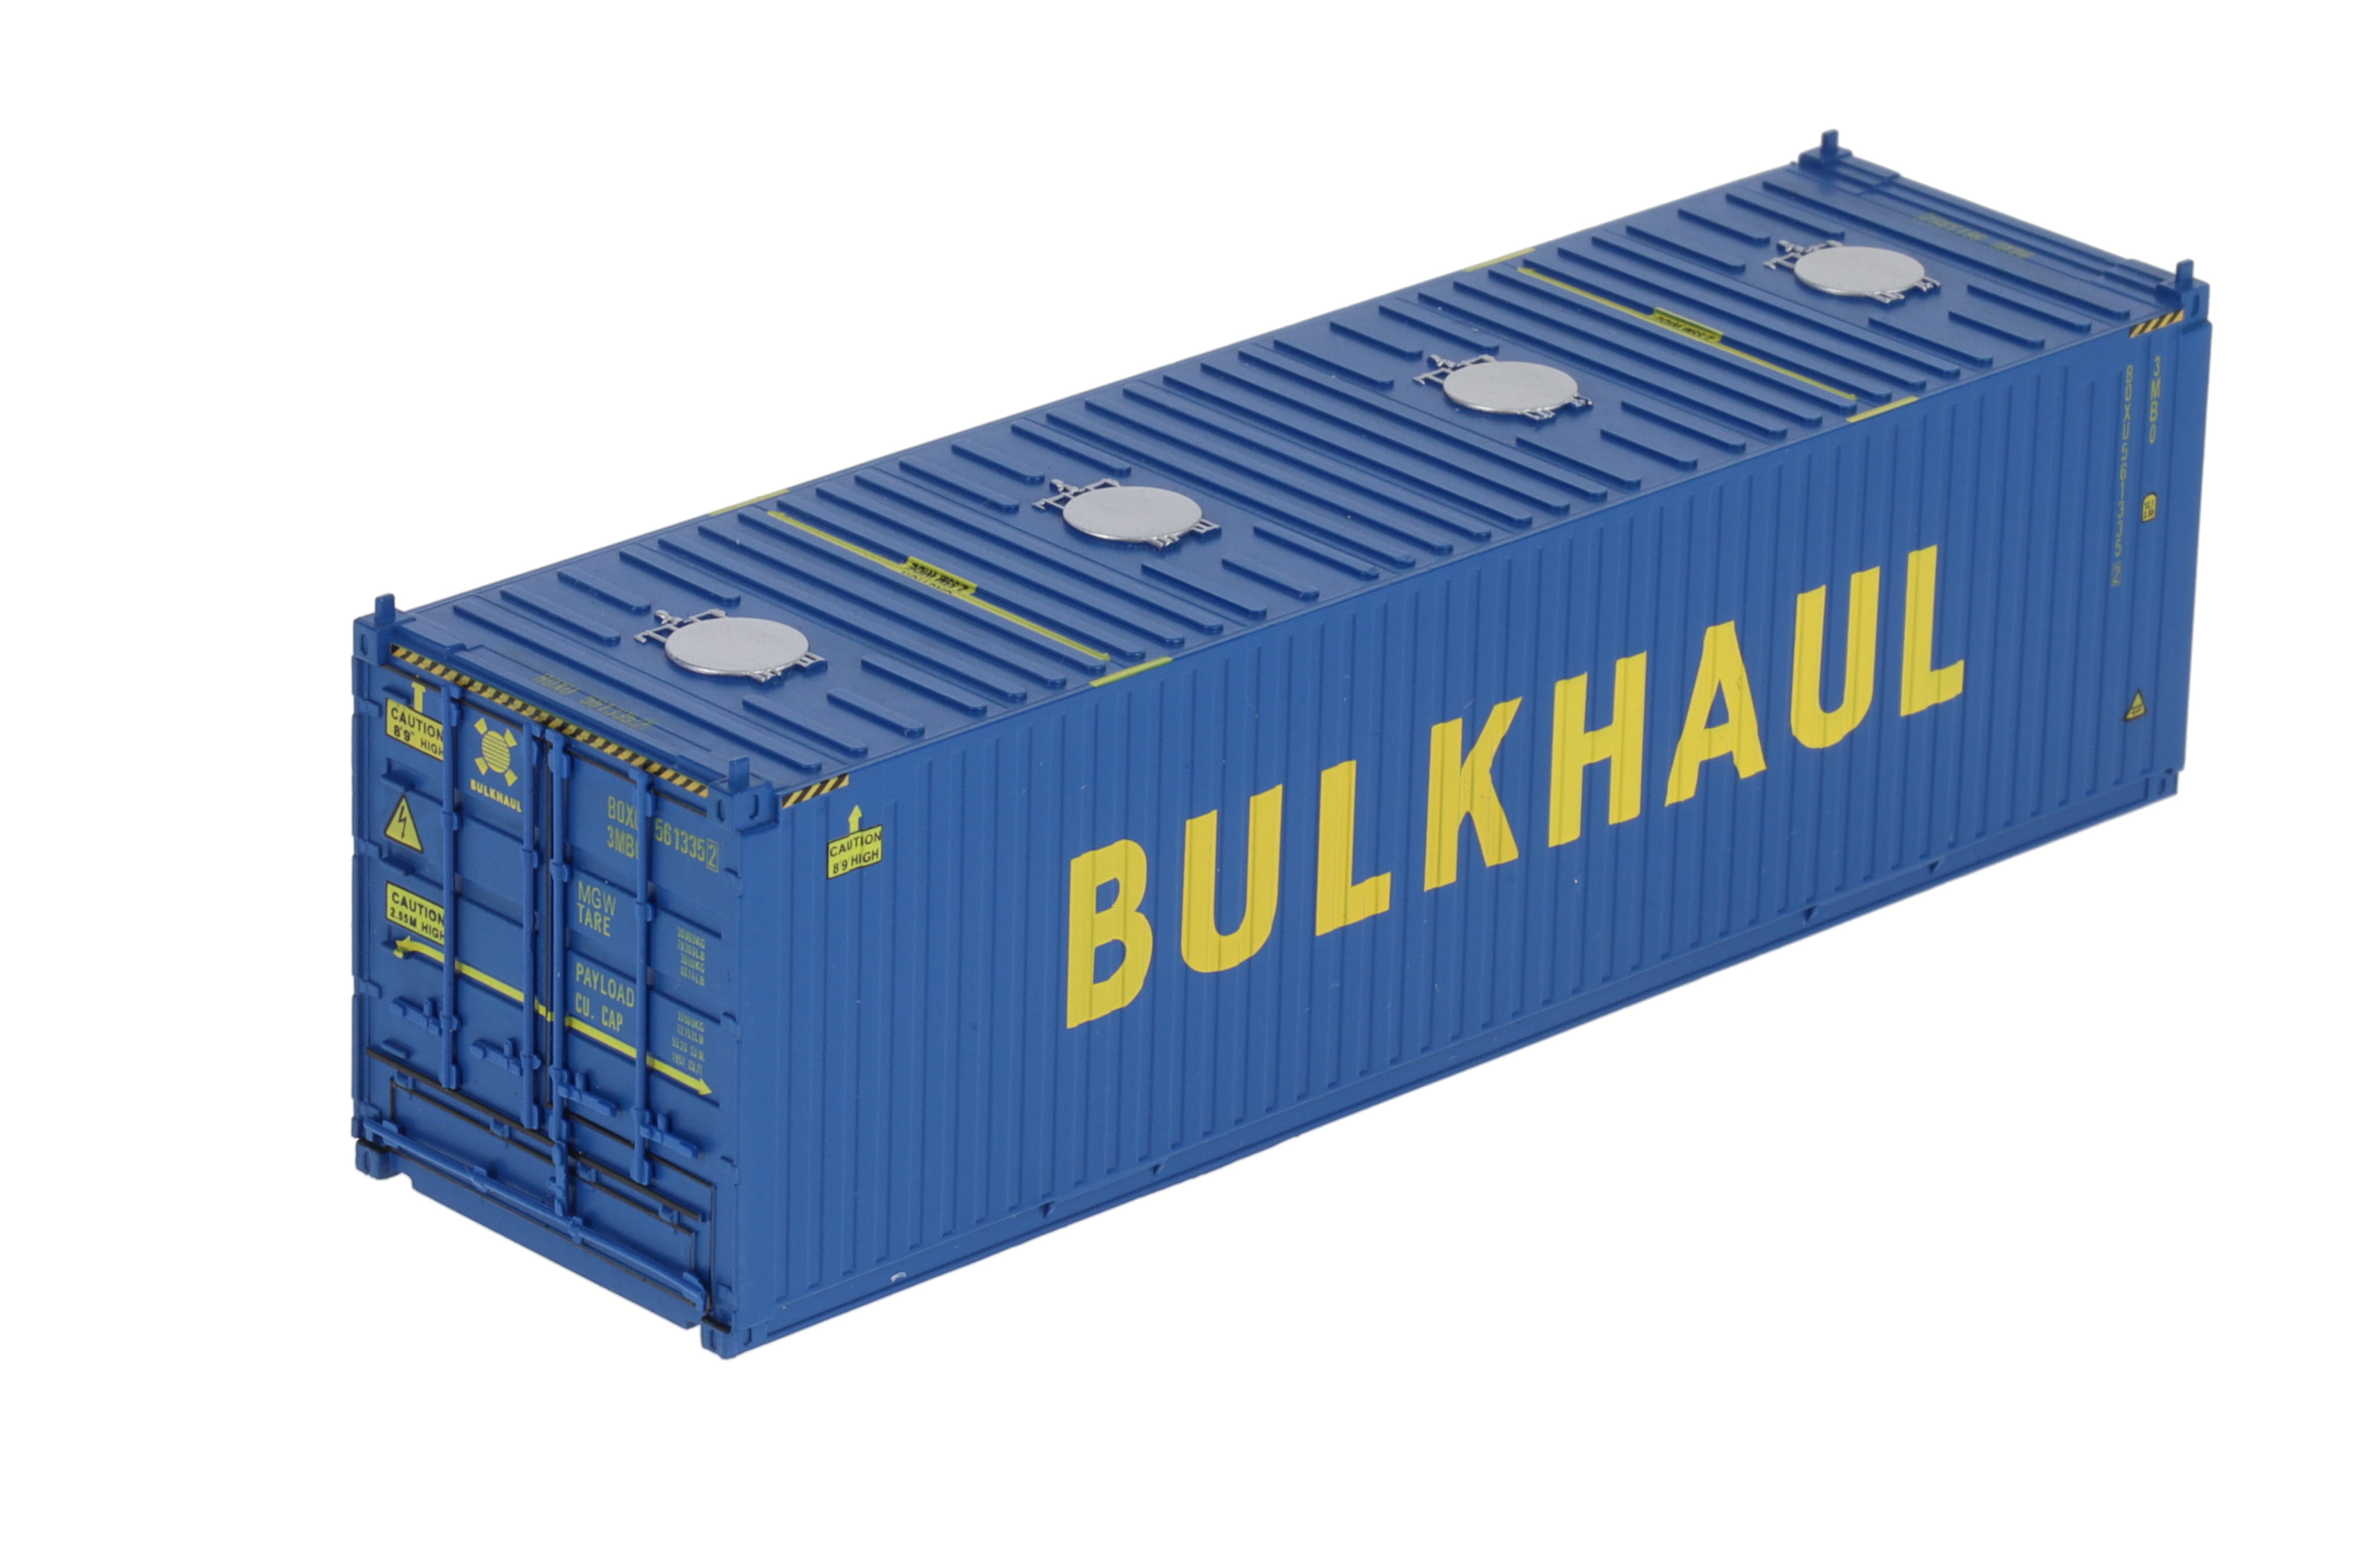 Bulk-Container "BULKHAUL" 30´ 